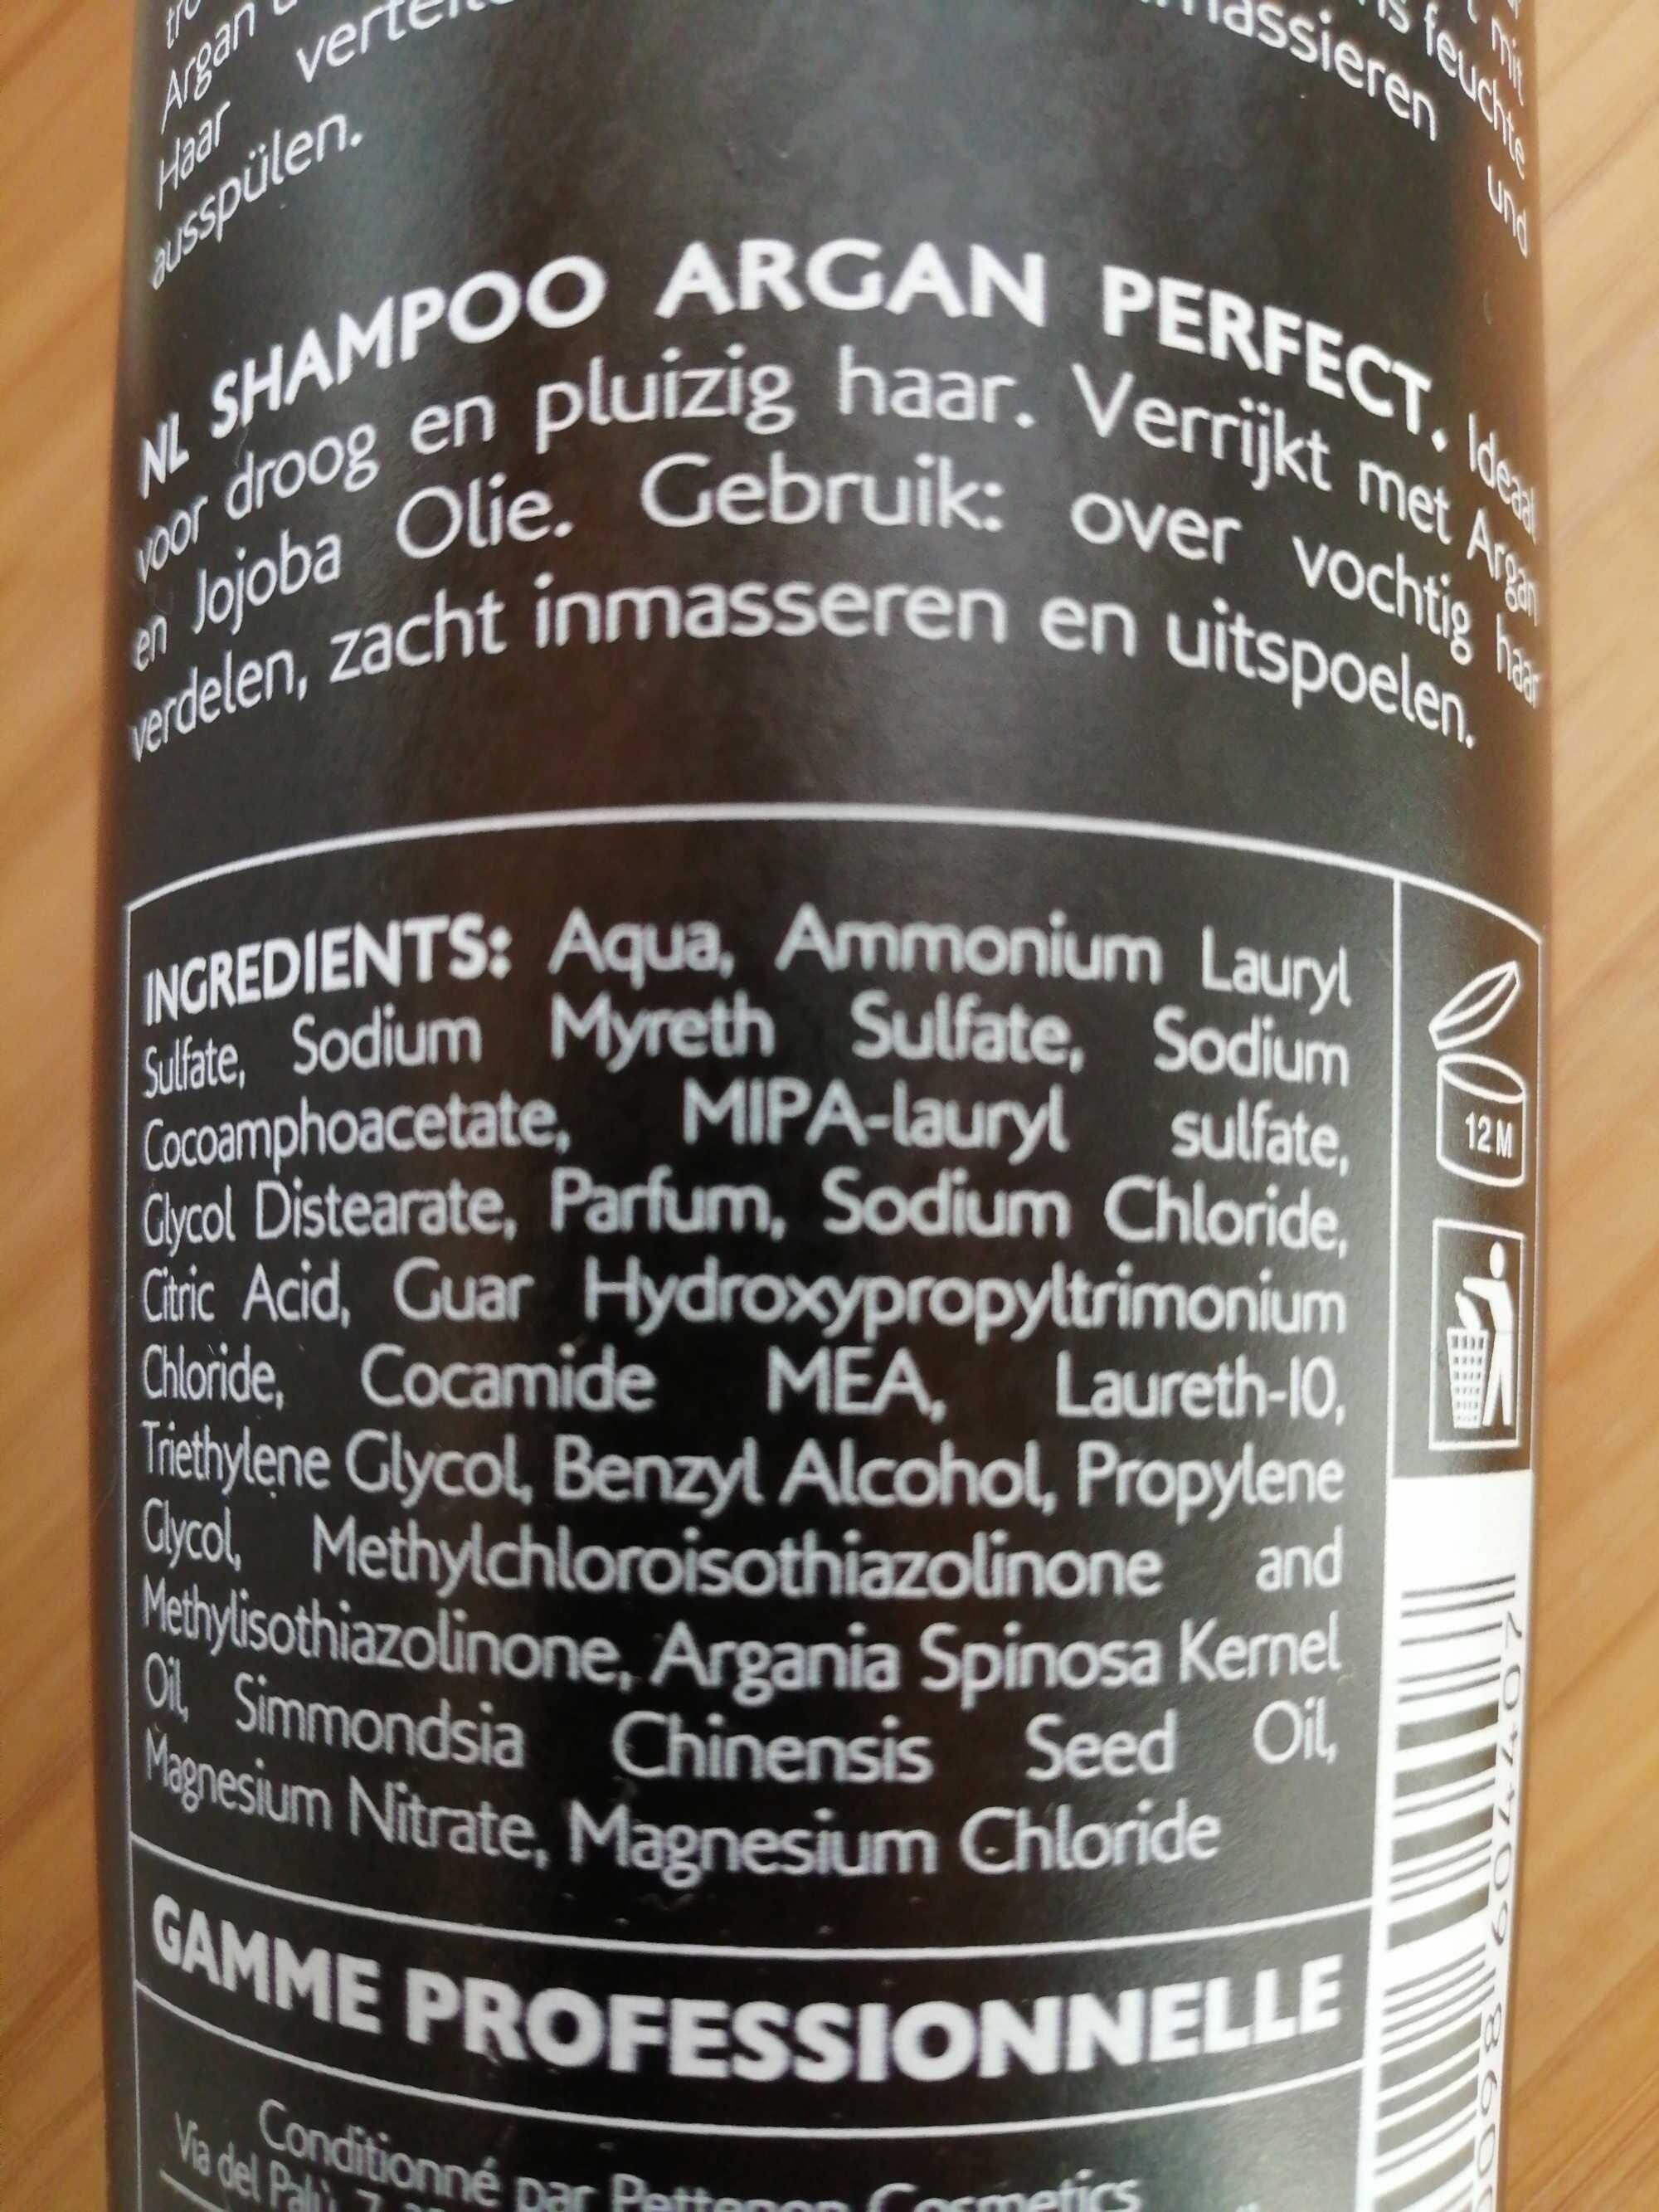 Shampoing Argan Perfect - Ingredients - fr